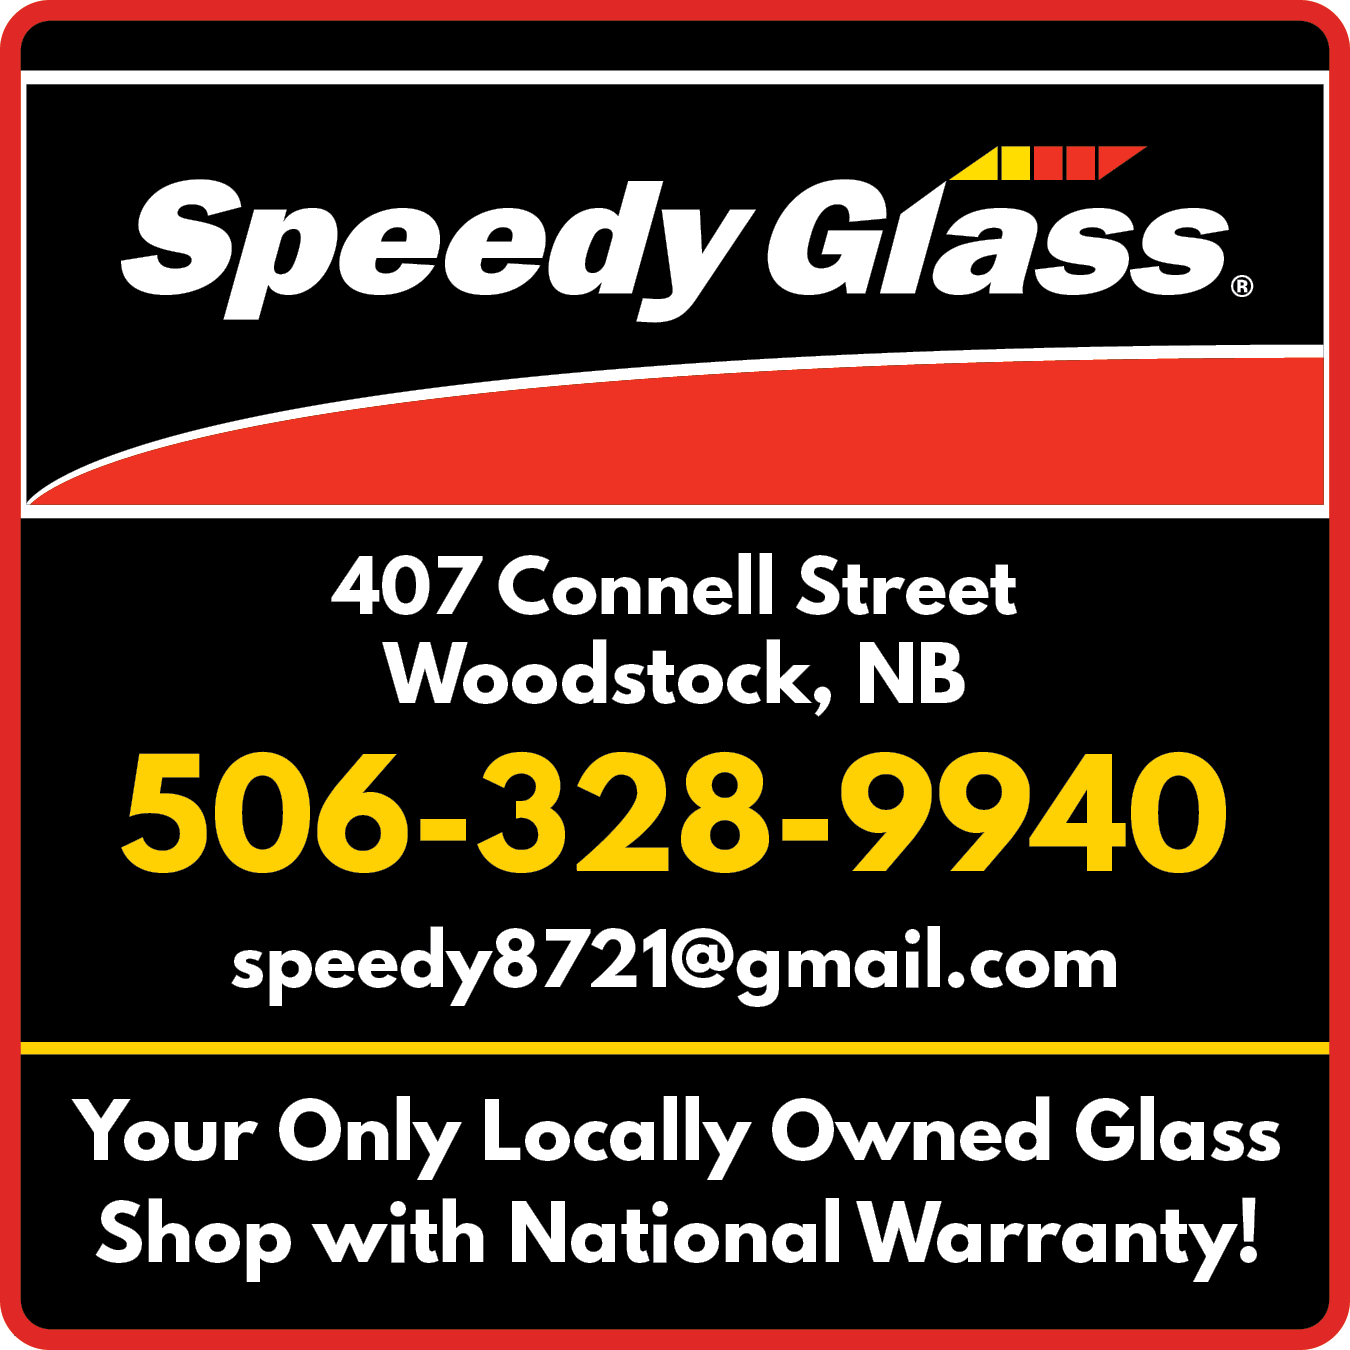 Speedy Glass Woodstock